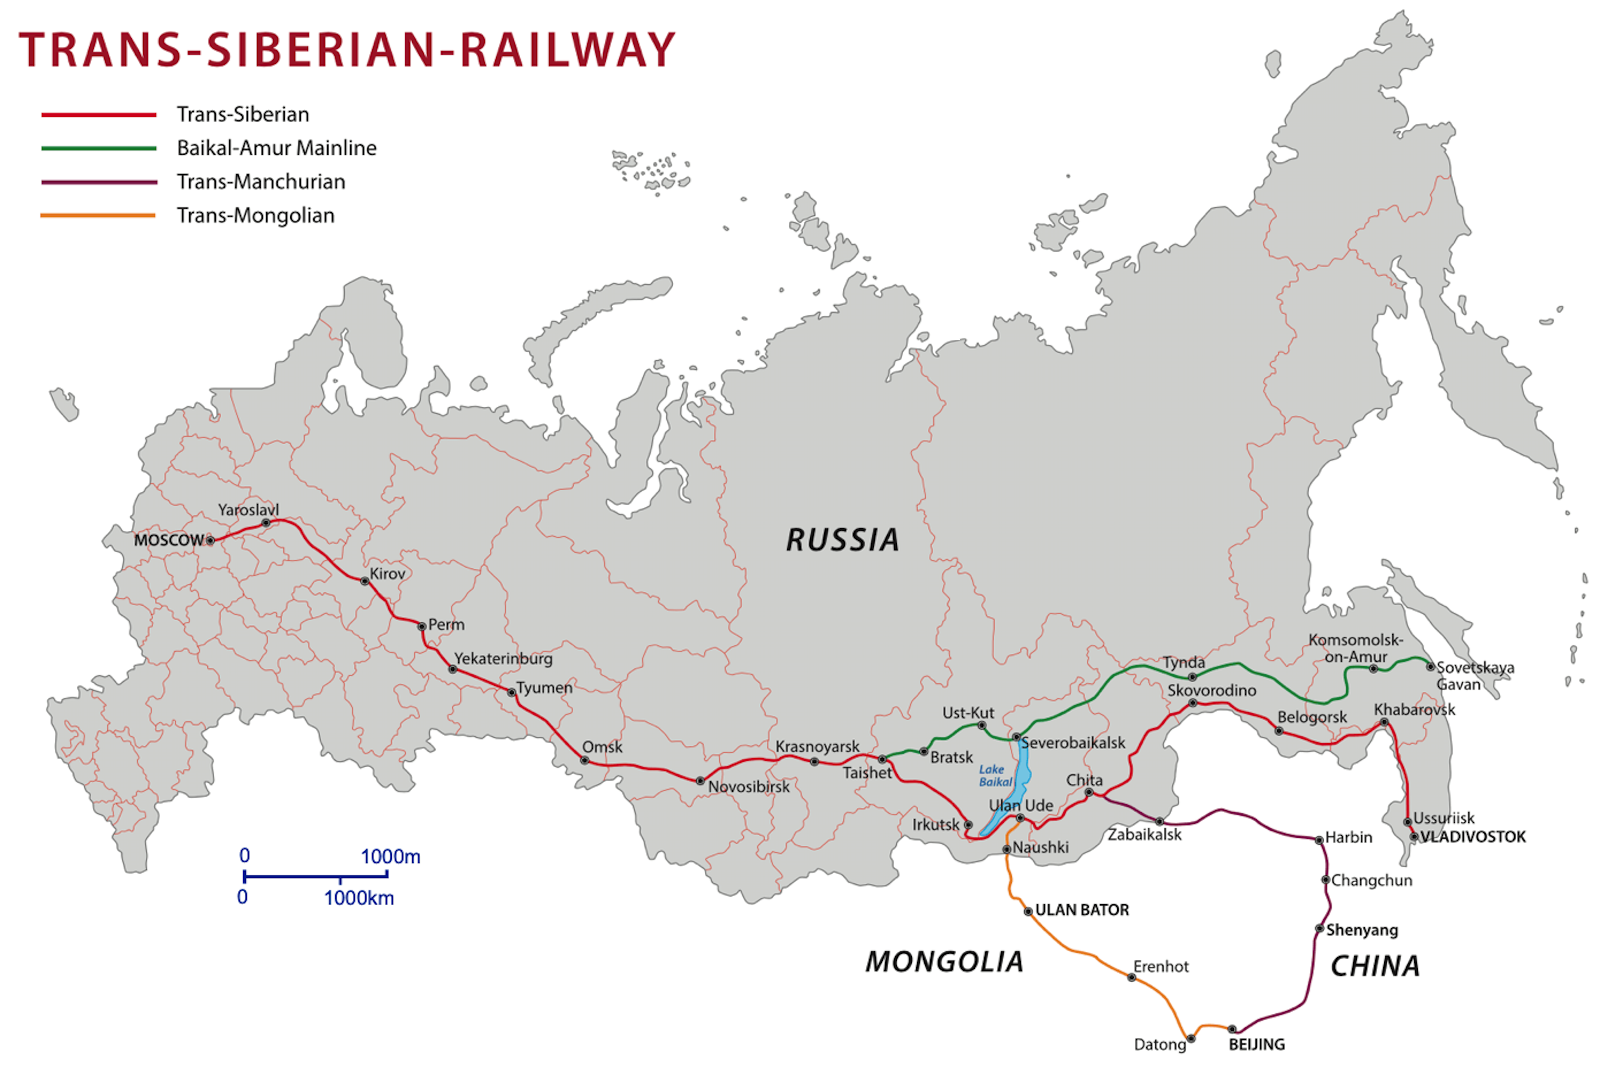 Dream Trip: How To Book The Trans-Siberian / Trans-Mongolian Railroad